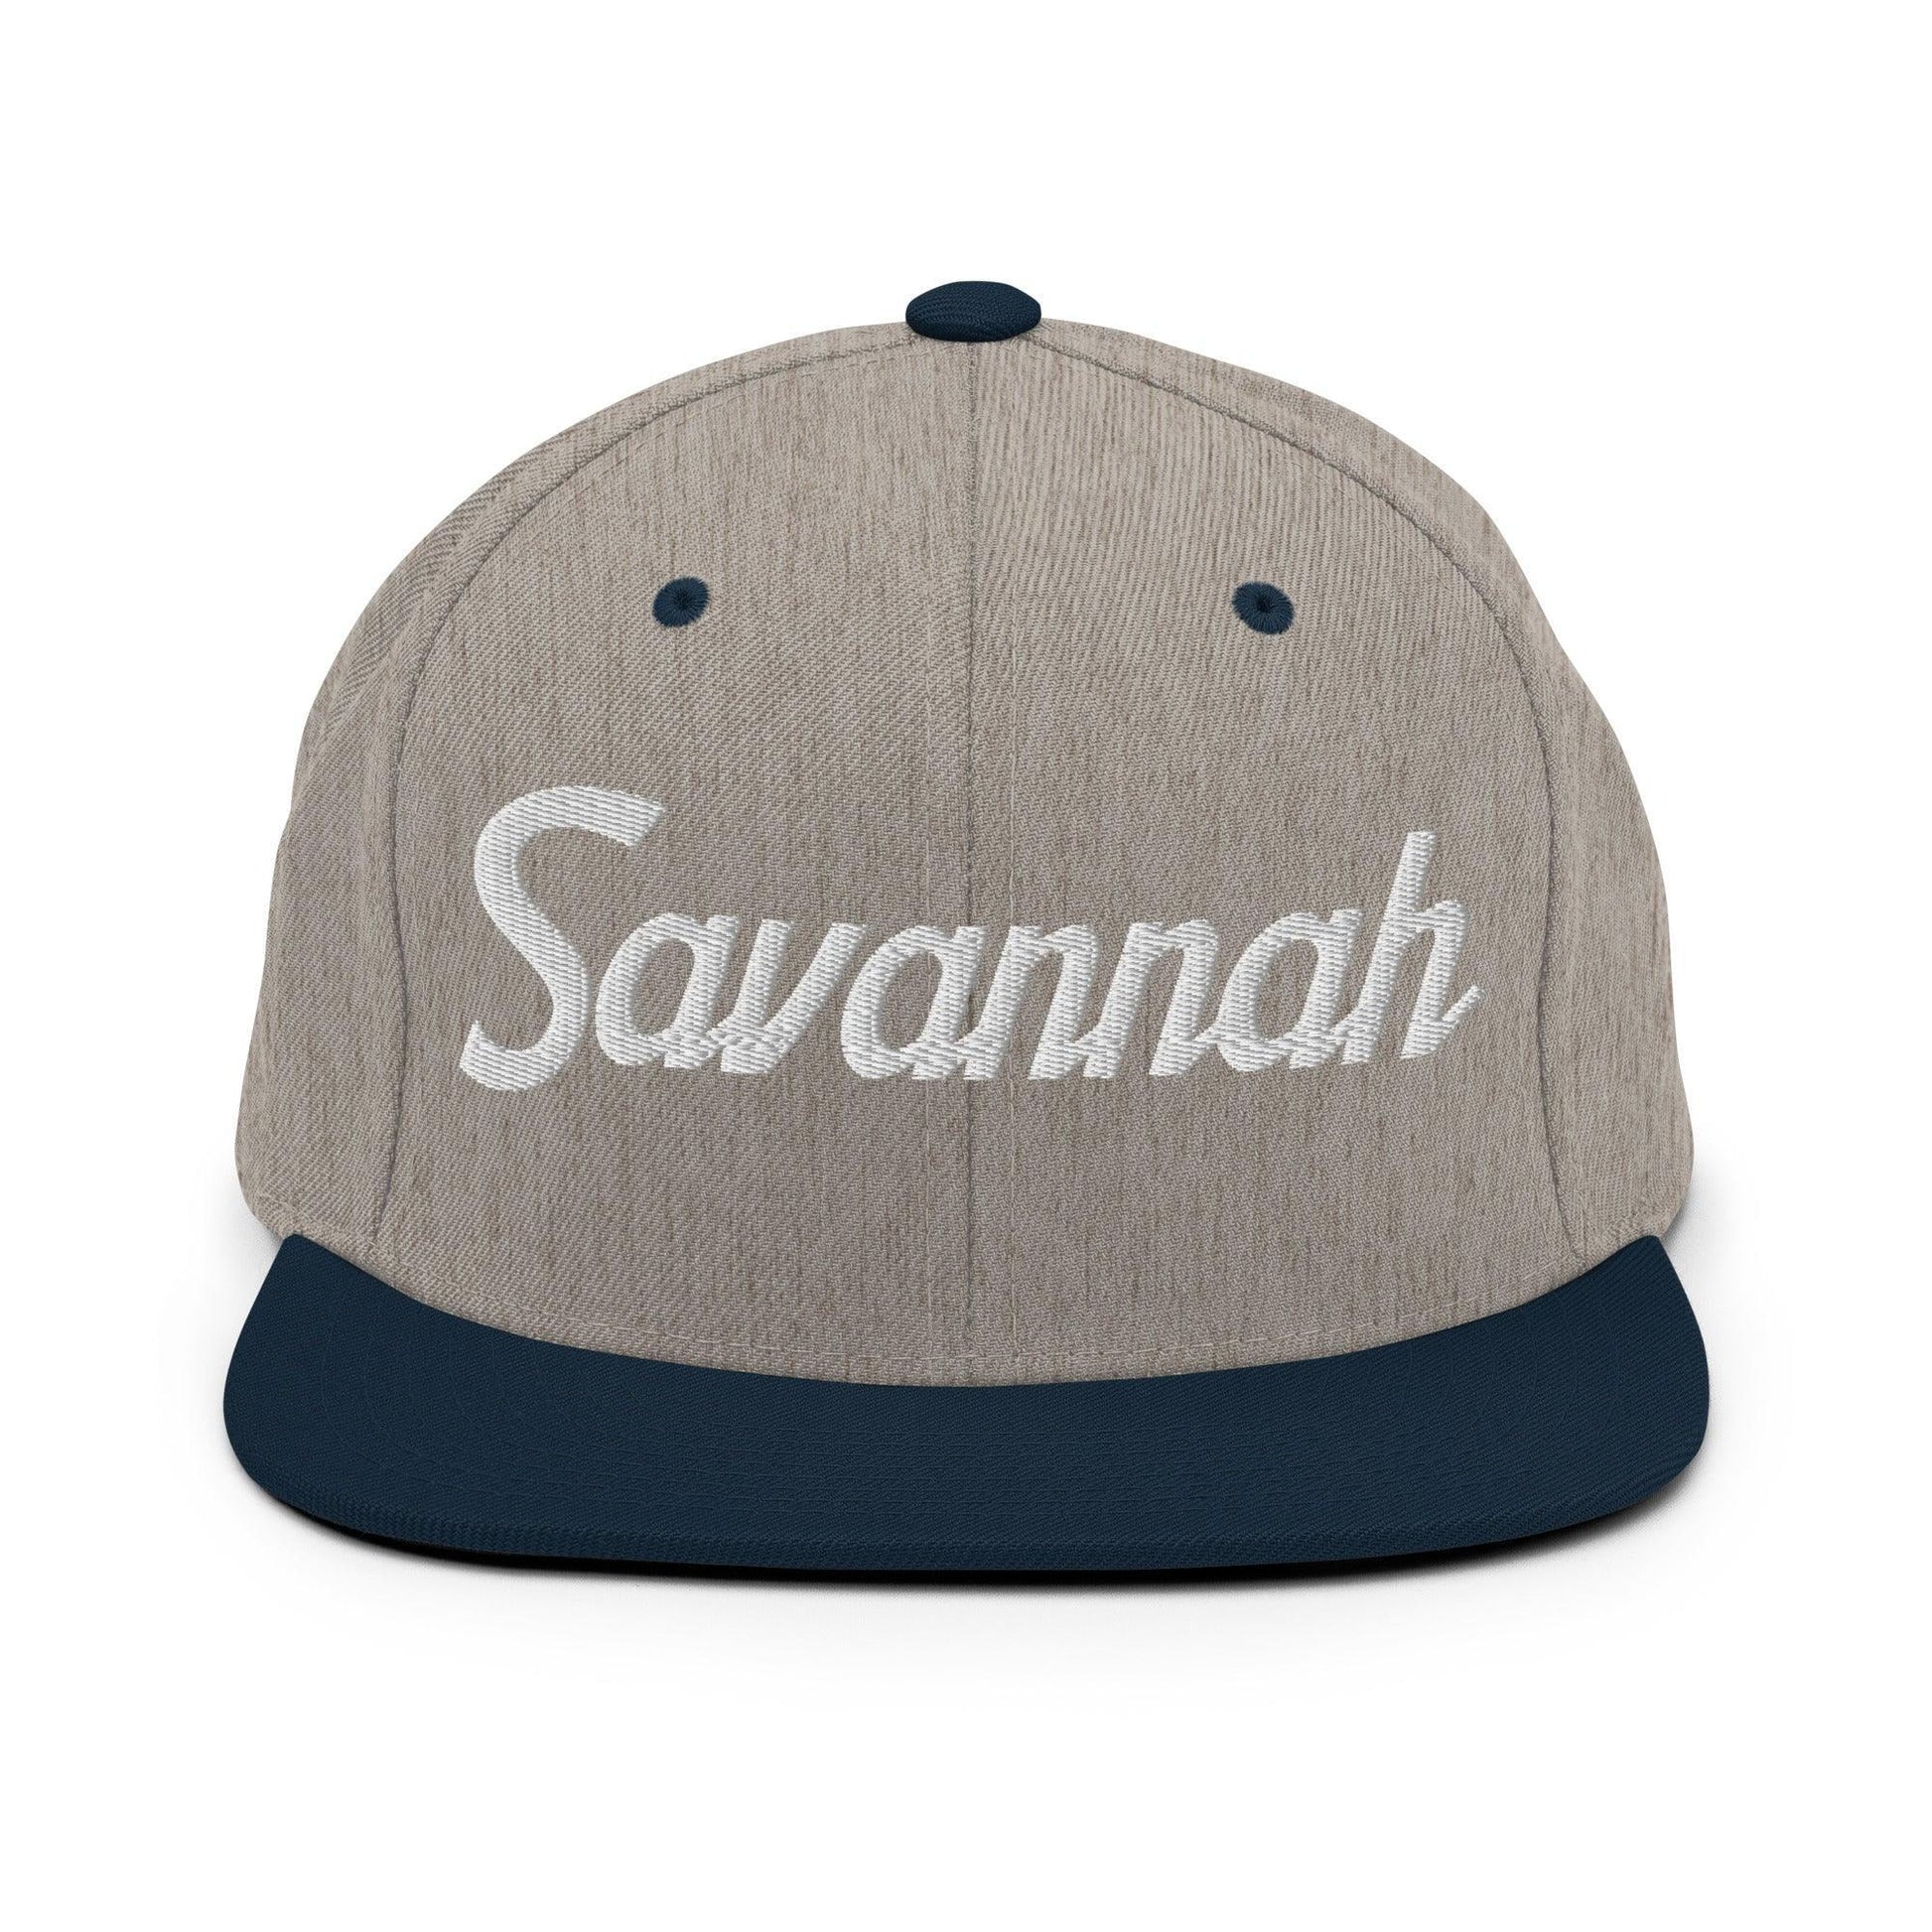 Savannah Script Snapback Hat Heather Grey/ Navy